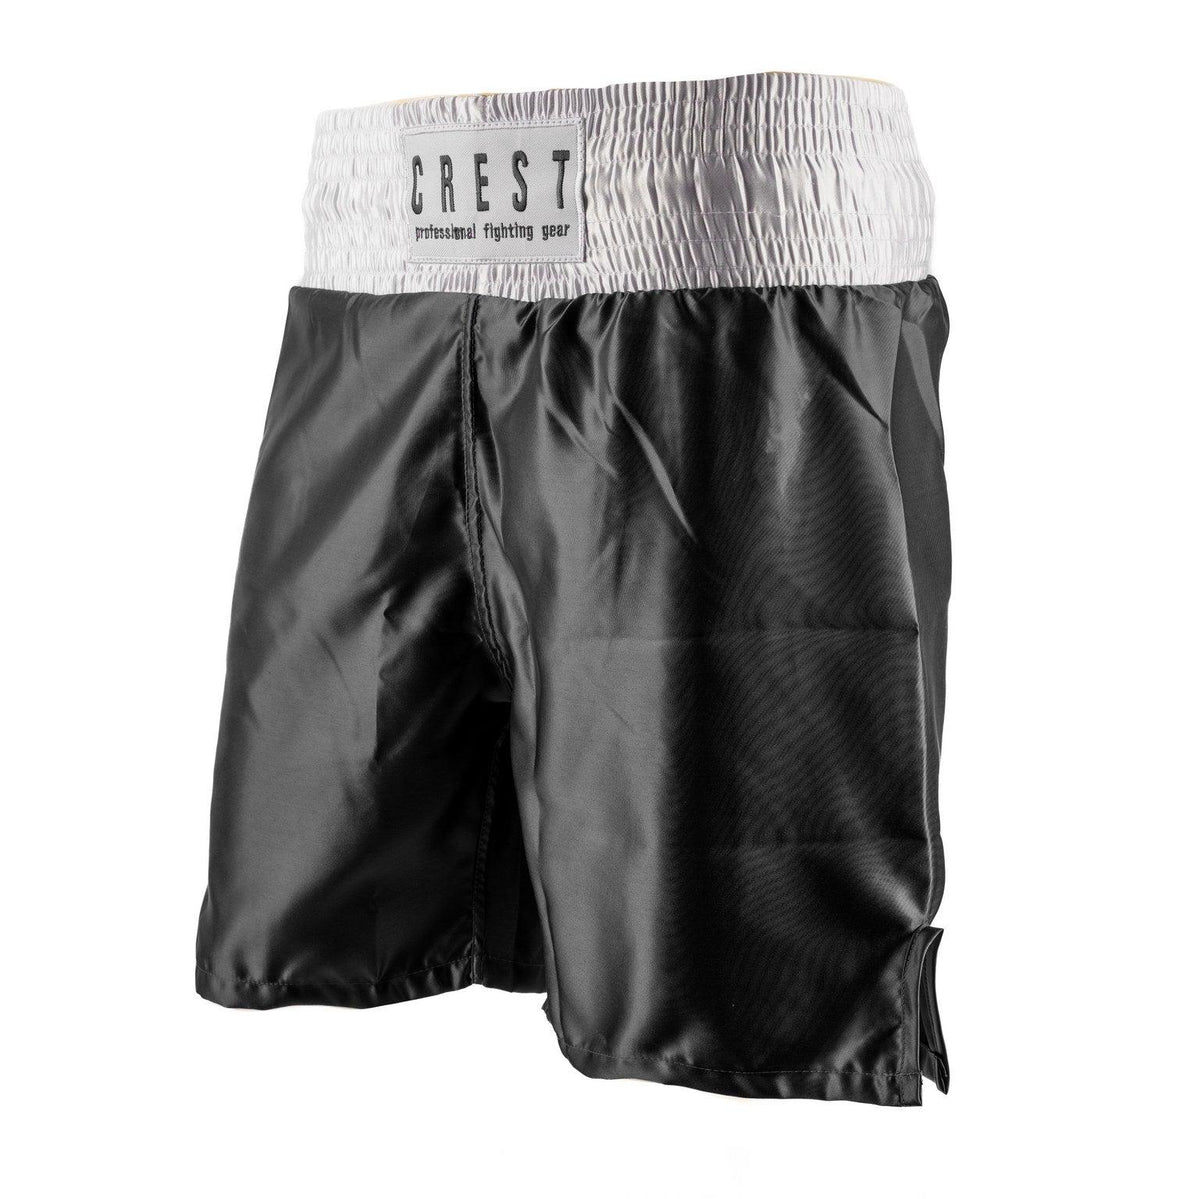 Boxing shorts &quot;C R E S T&quot; - Crest - PFG